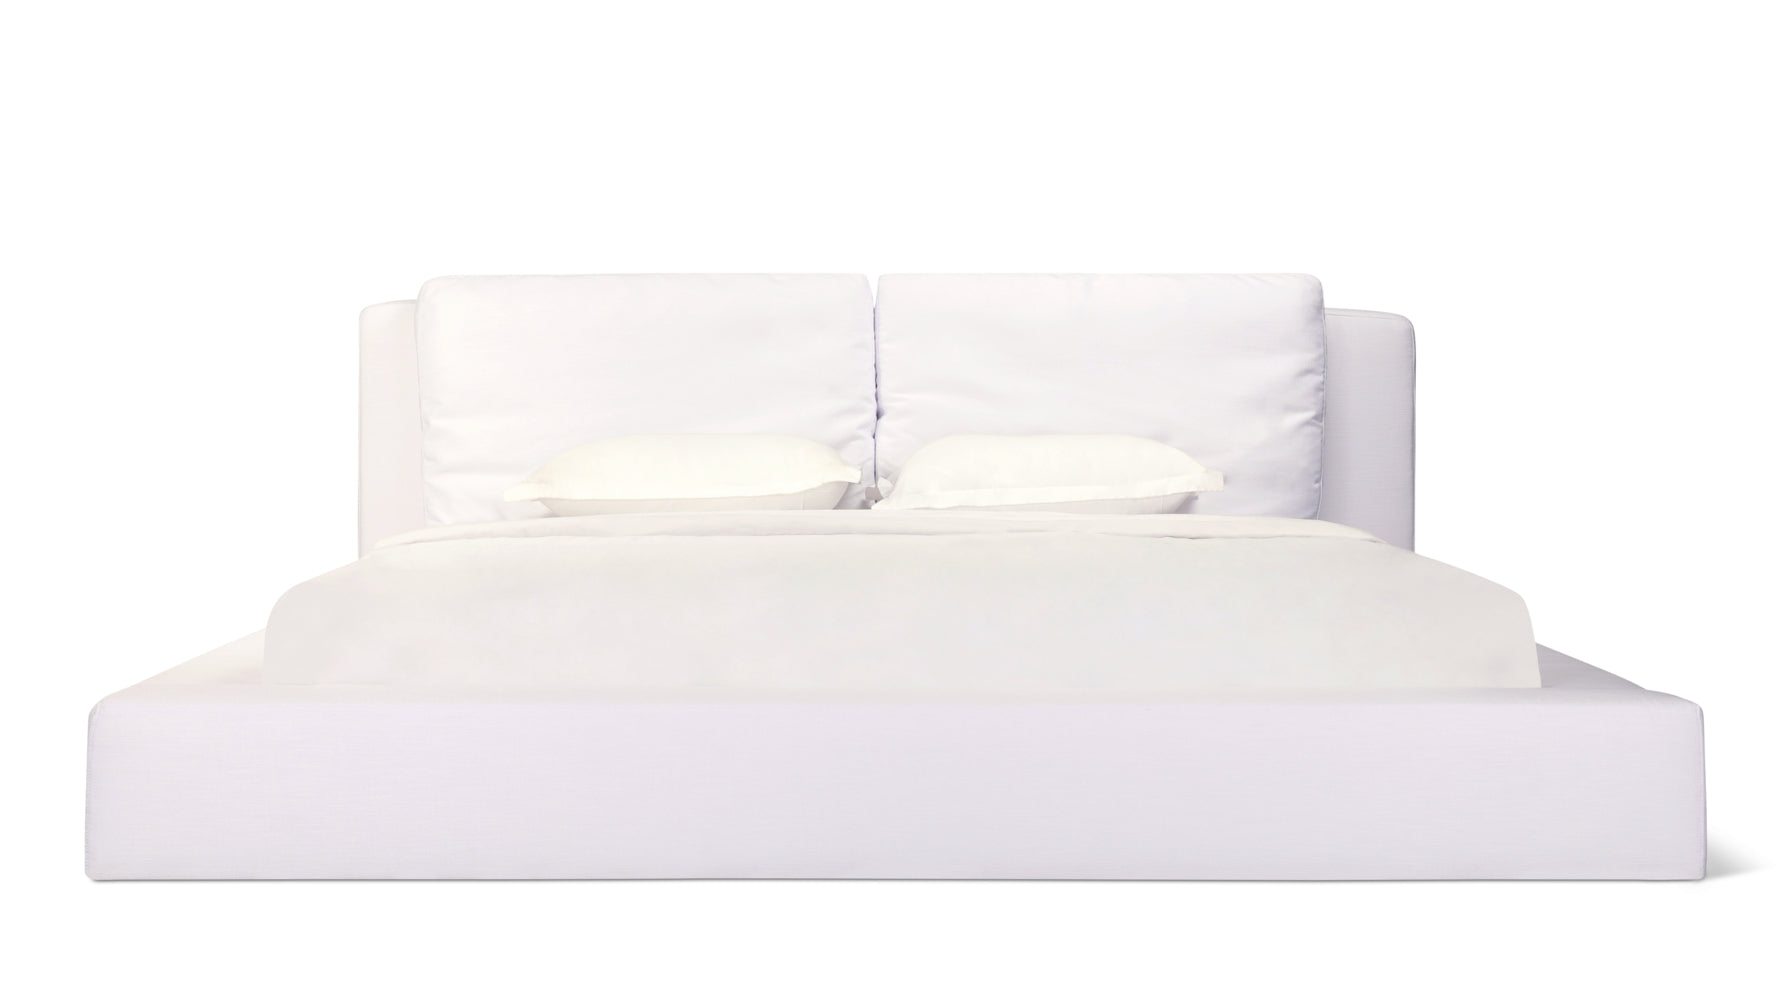 Movie Night™ Bed, King, White - Image 1